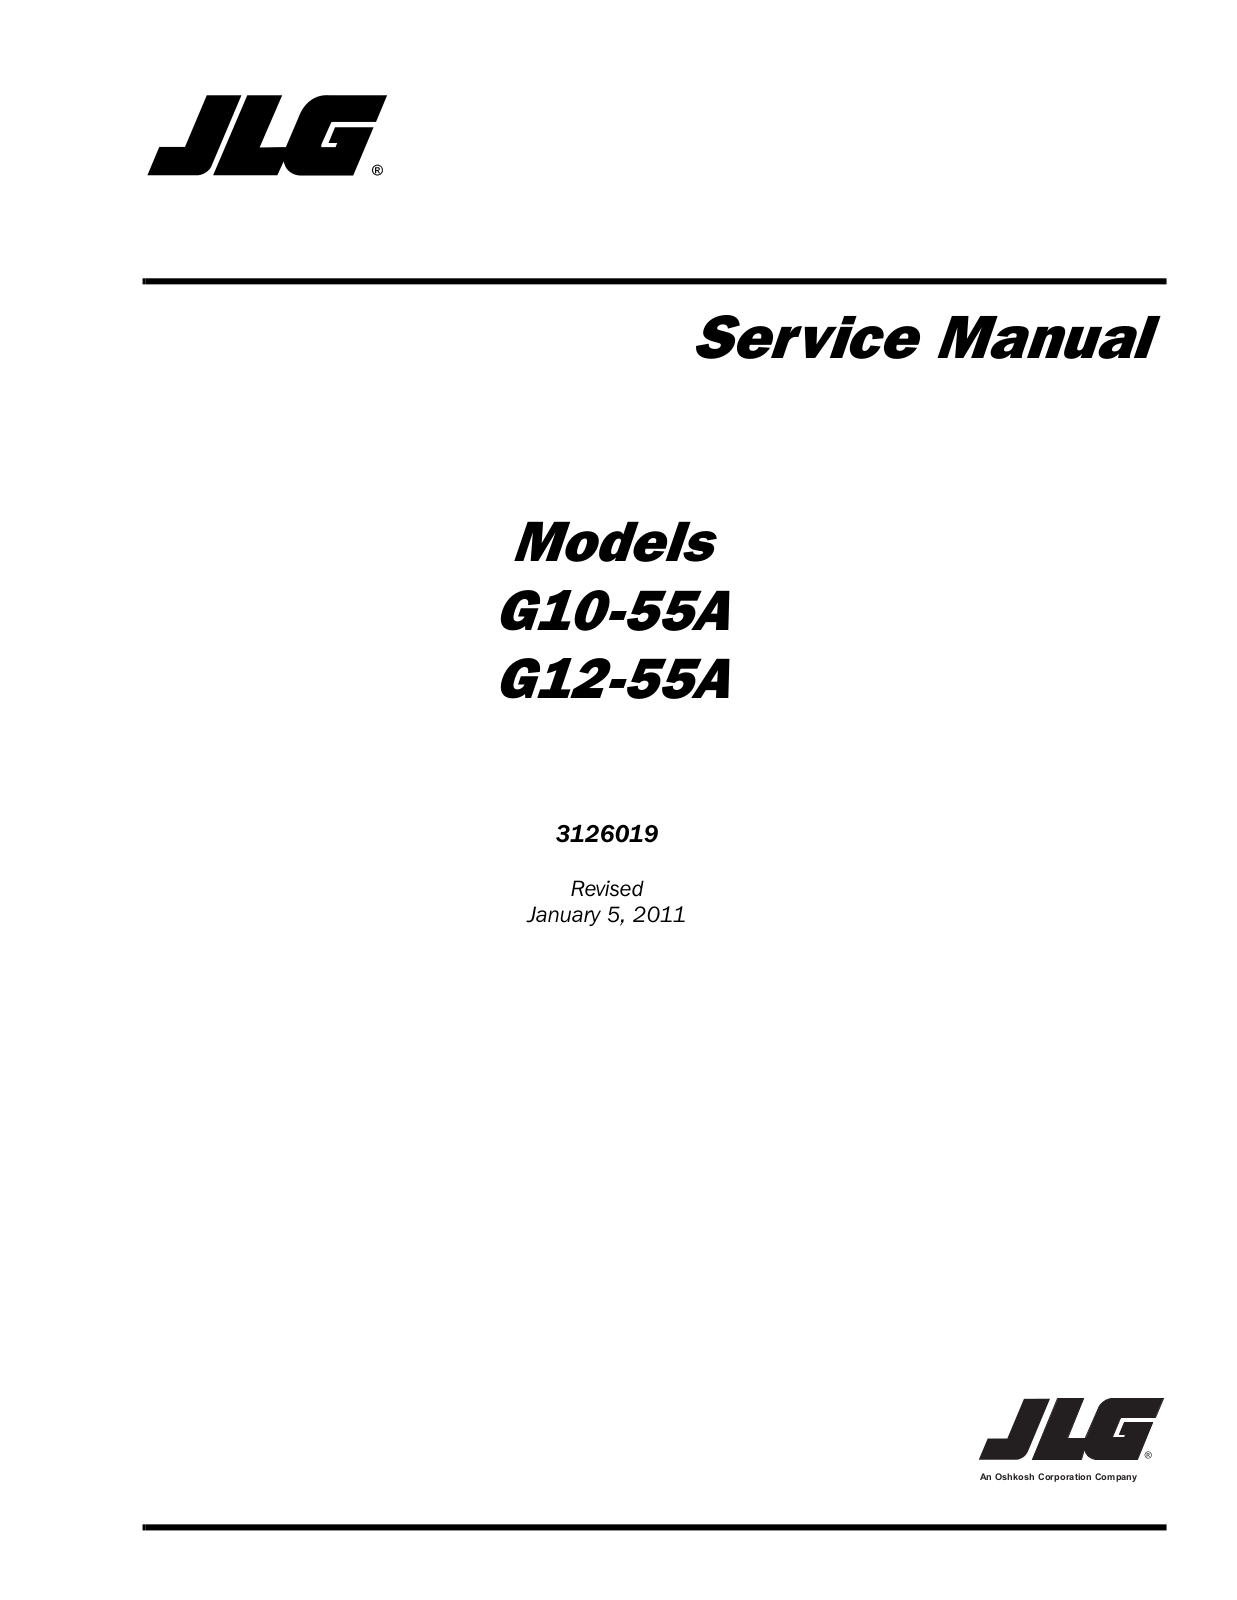 JLG G12-55A Service Manual